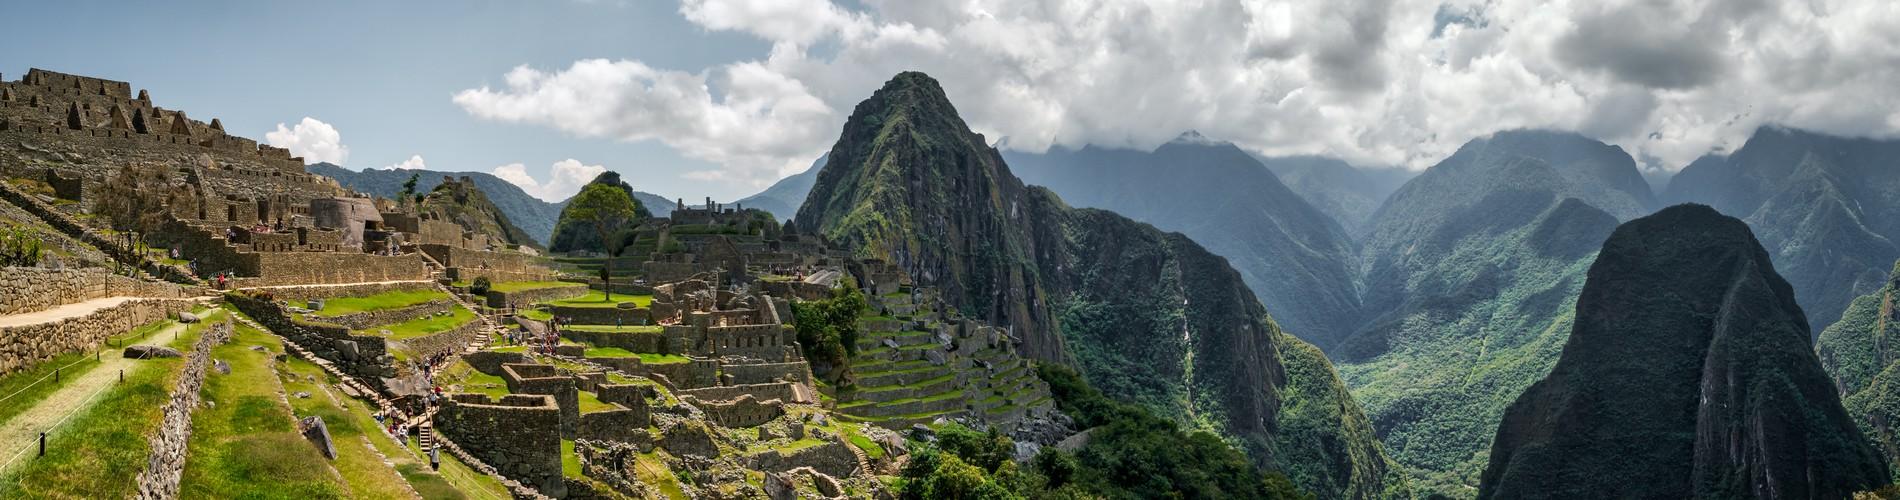 3-day Machu Picchu express